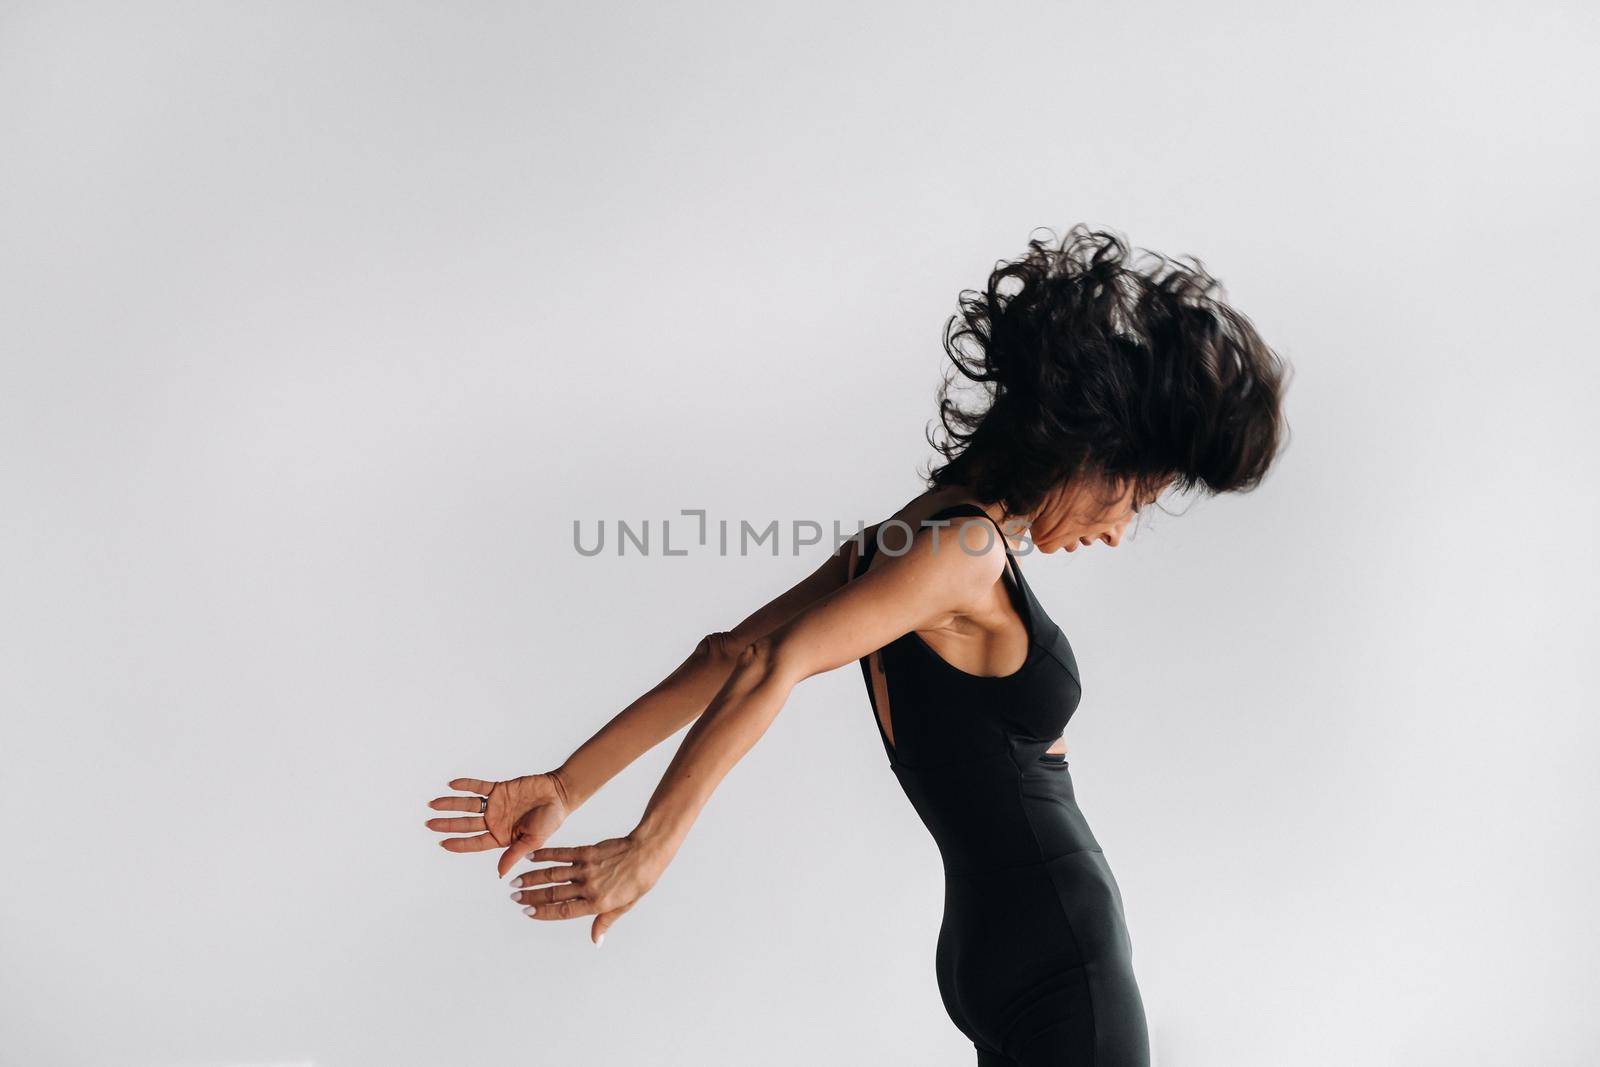 A woman in black sportswear is engaged in dynamic kali meditation in the Yoga hall.